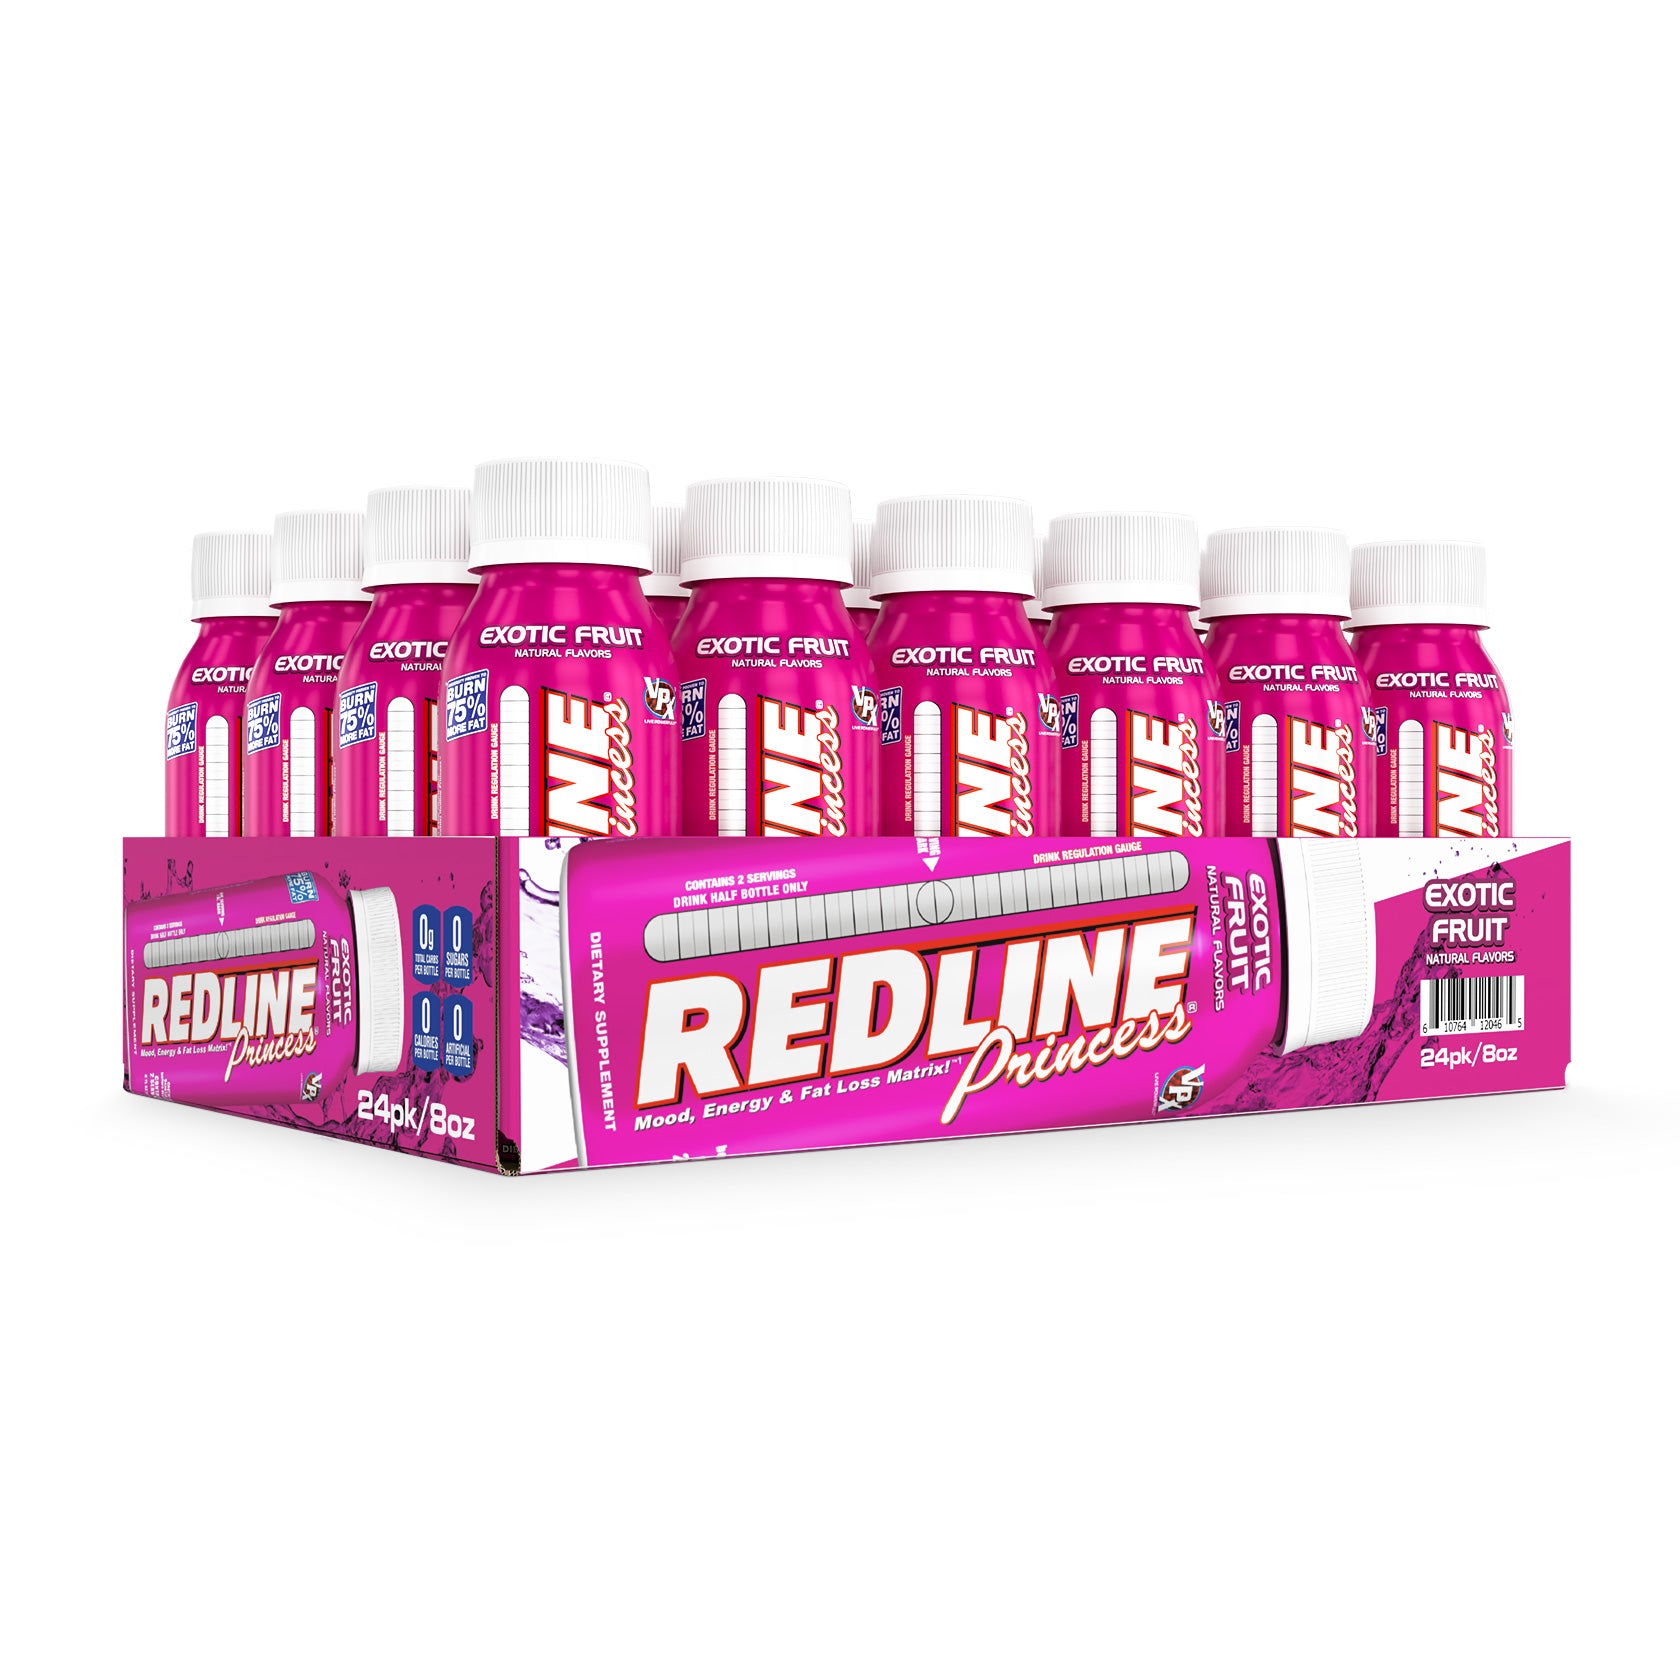 redline energy drink where to buy